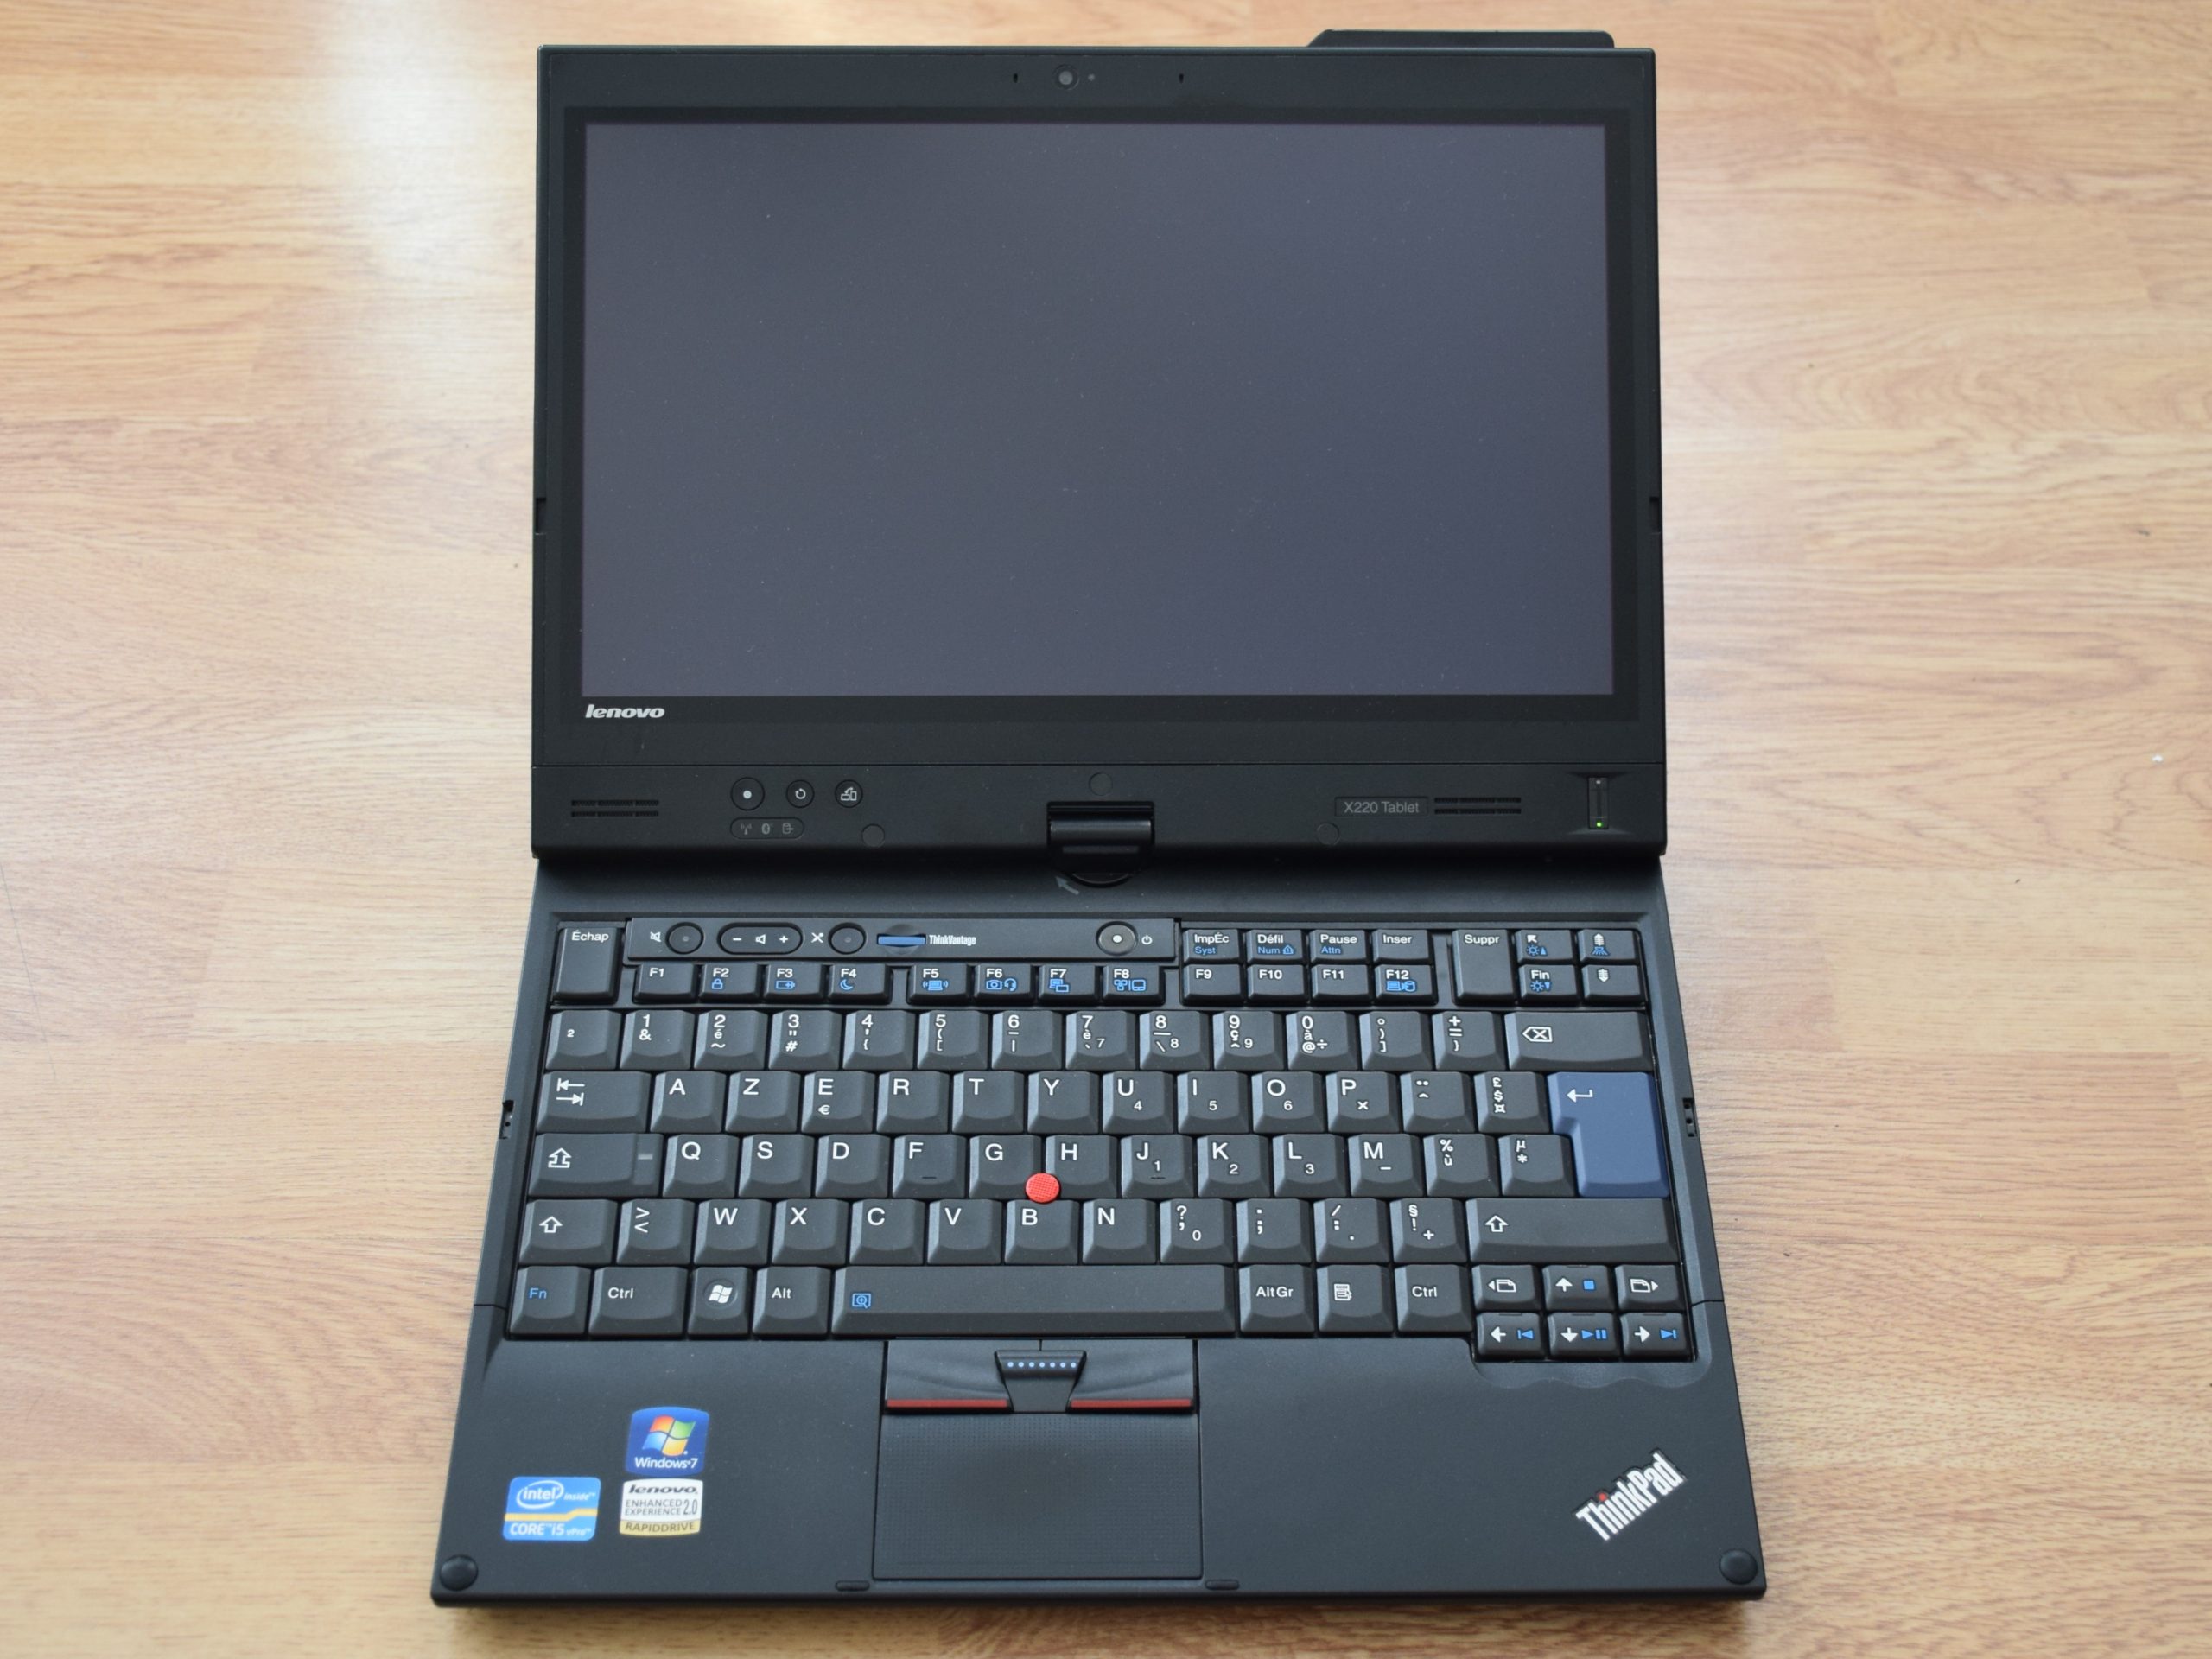 Lenovo ThinkPad X220 Tablet - Face